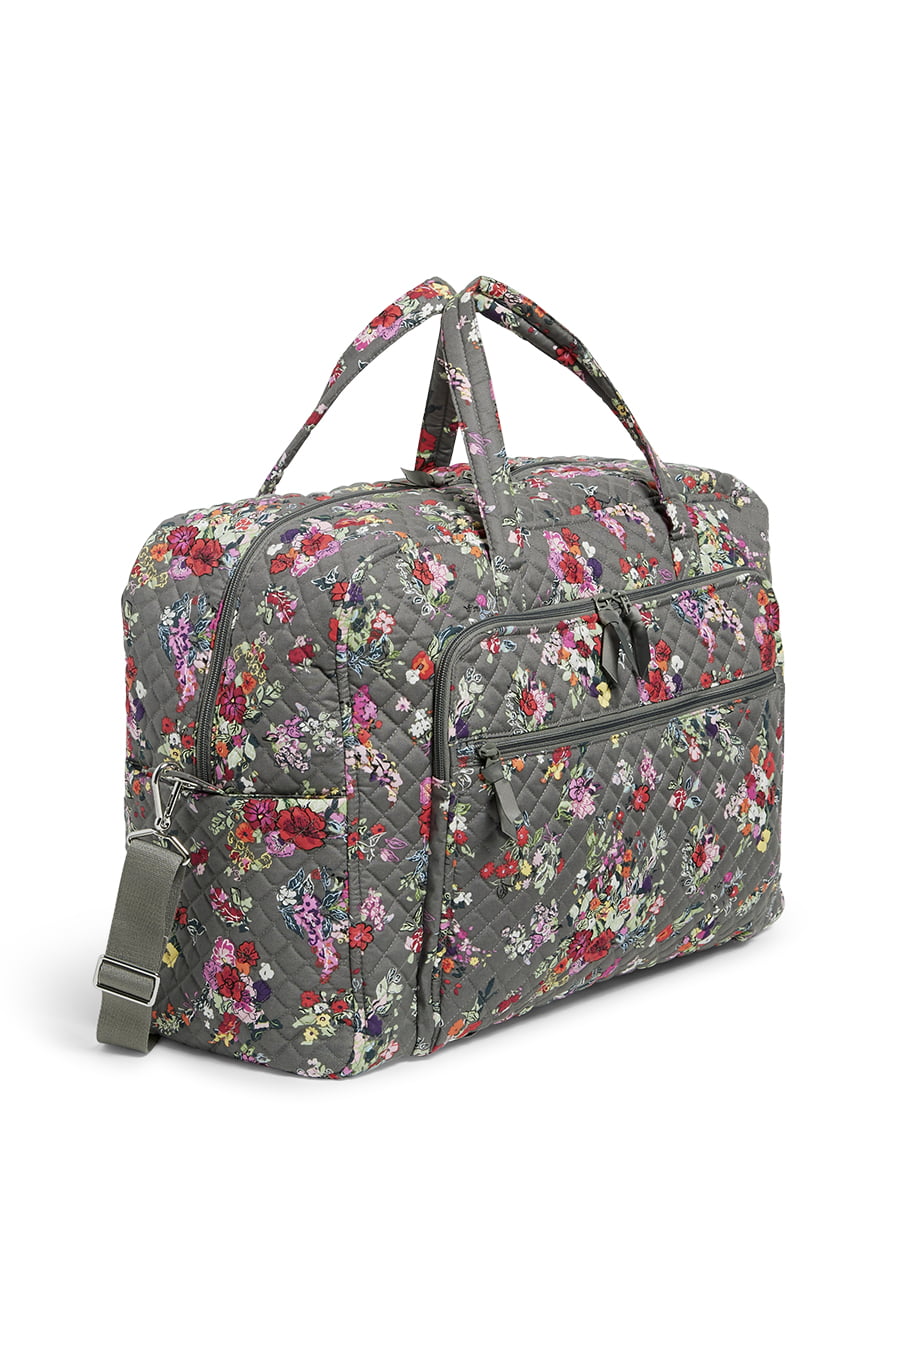 Vera Bradley Women's Recycled Cotton Grand Weekender Travel Bag 